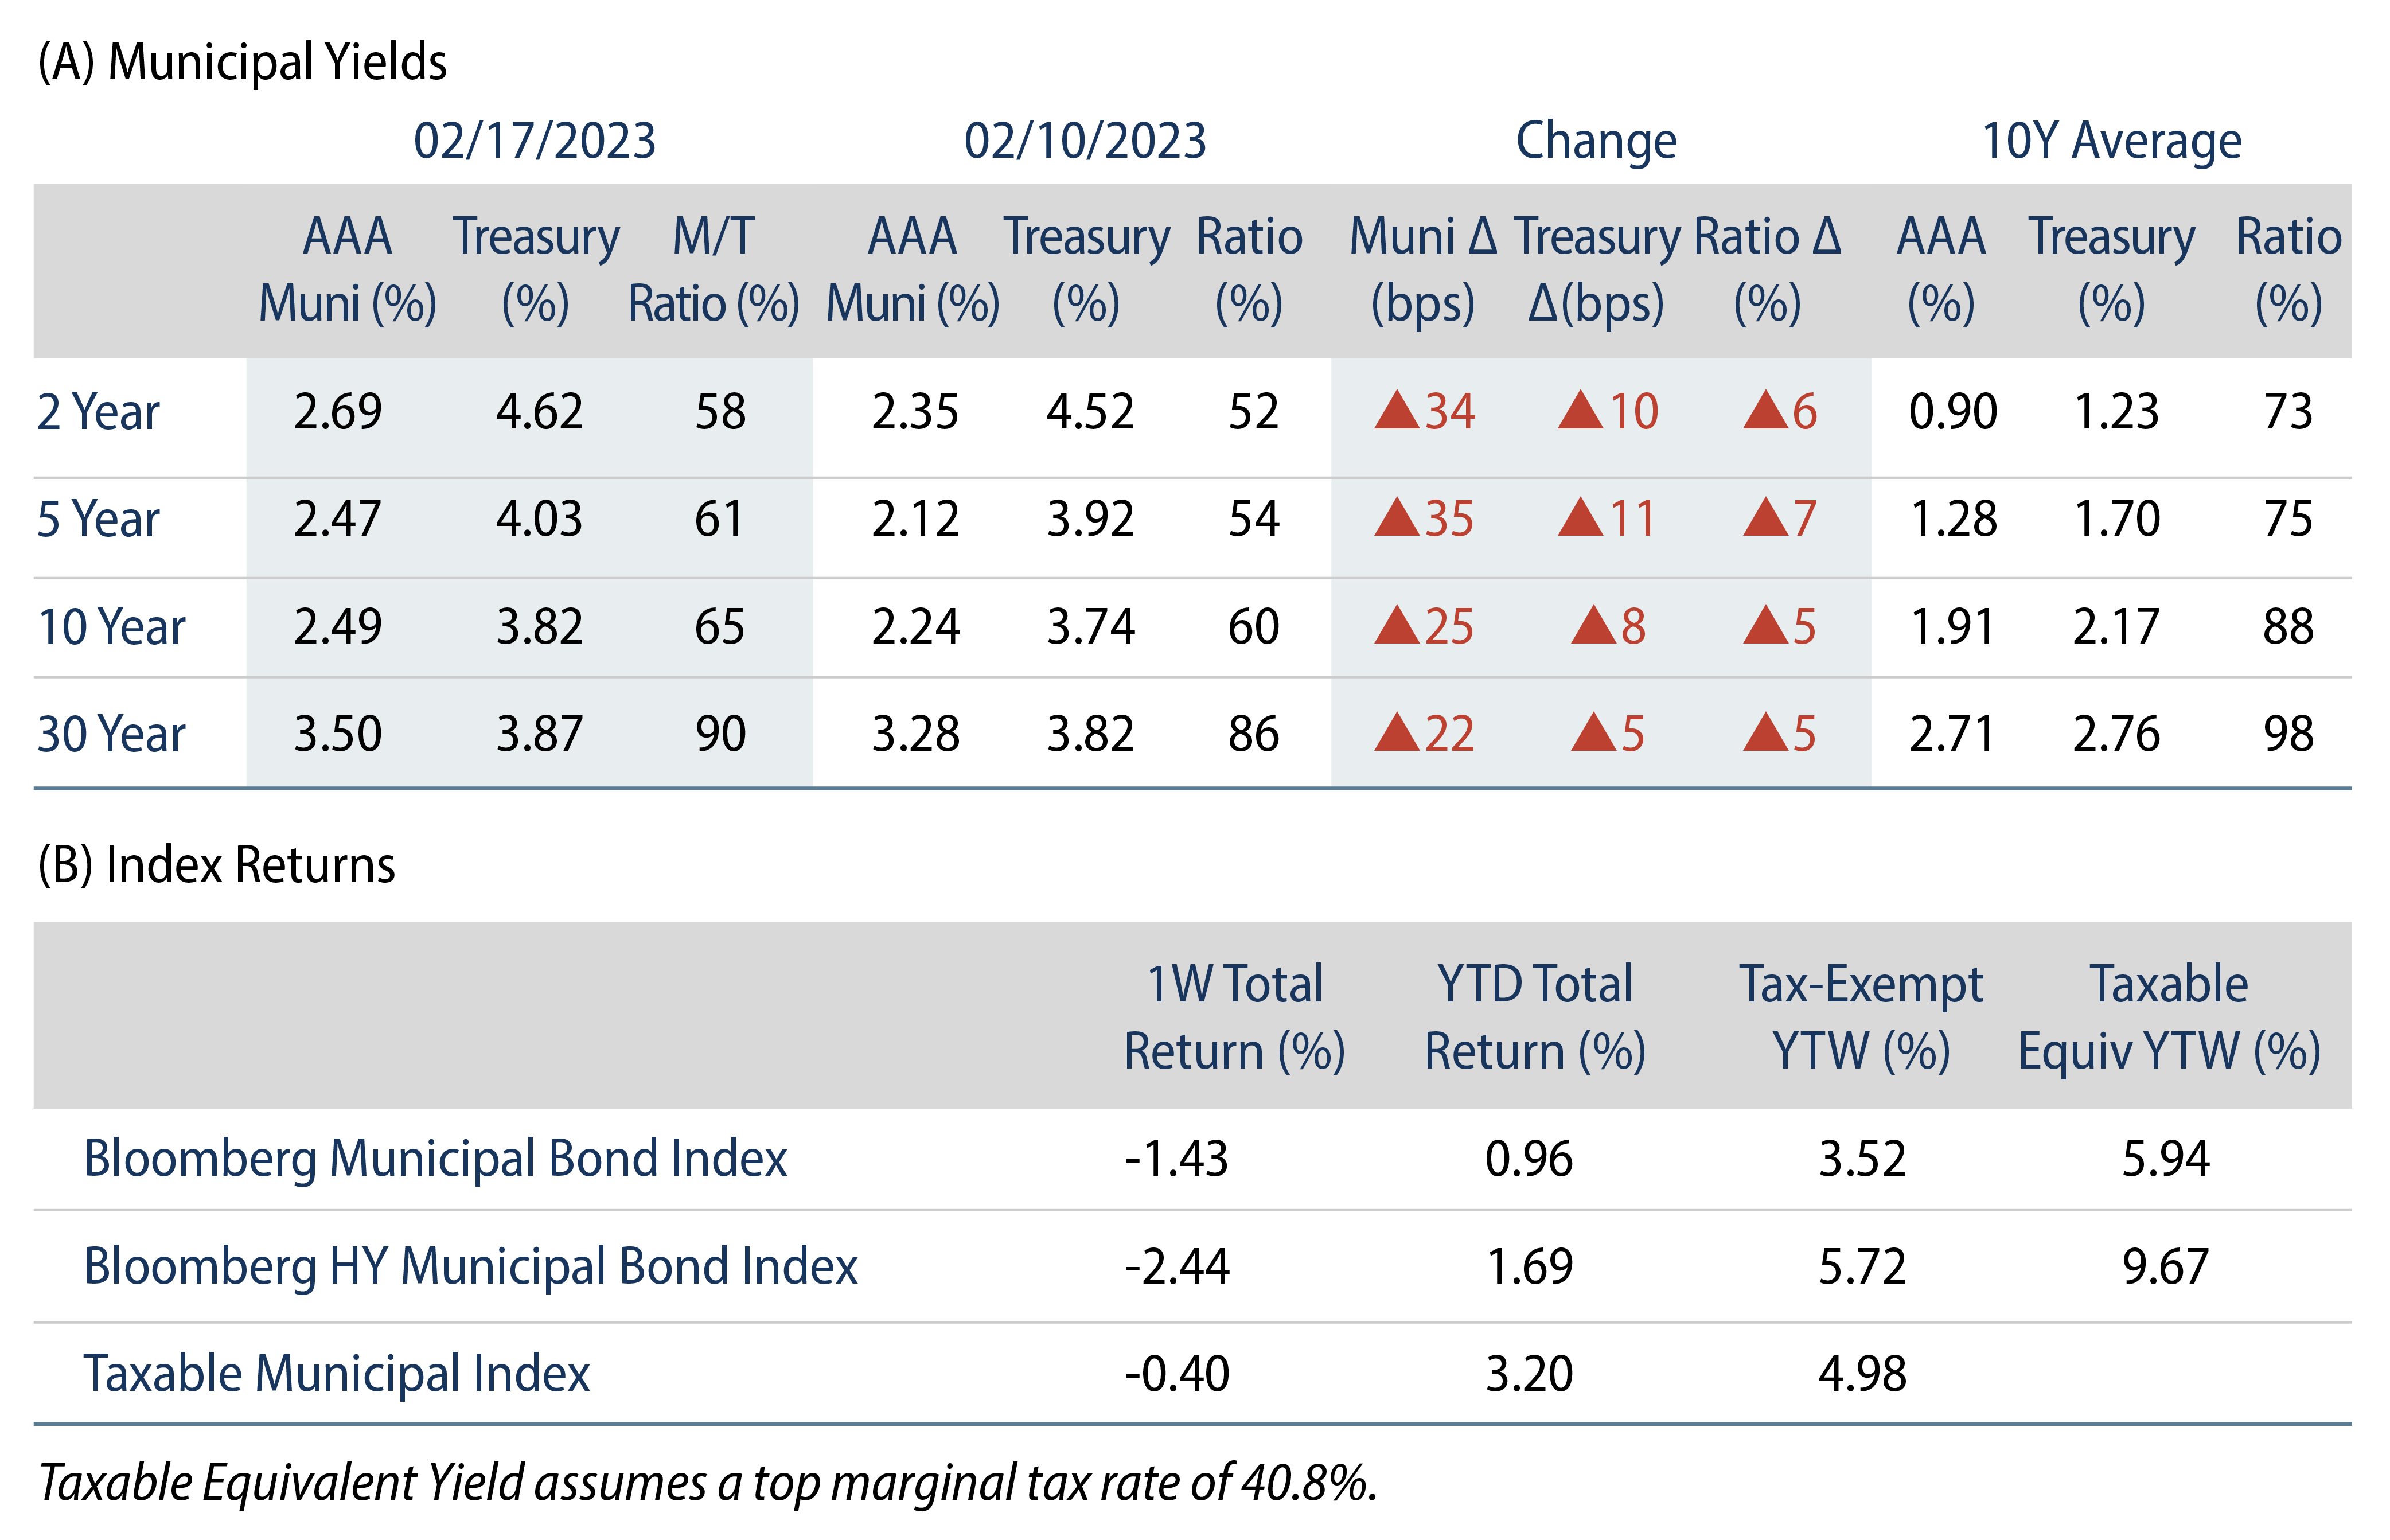 Municipal Bond Yields and Index Returns